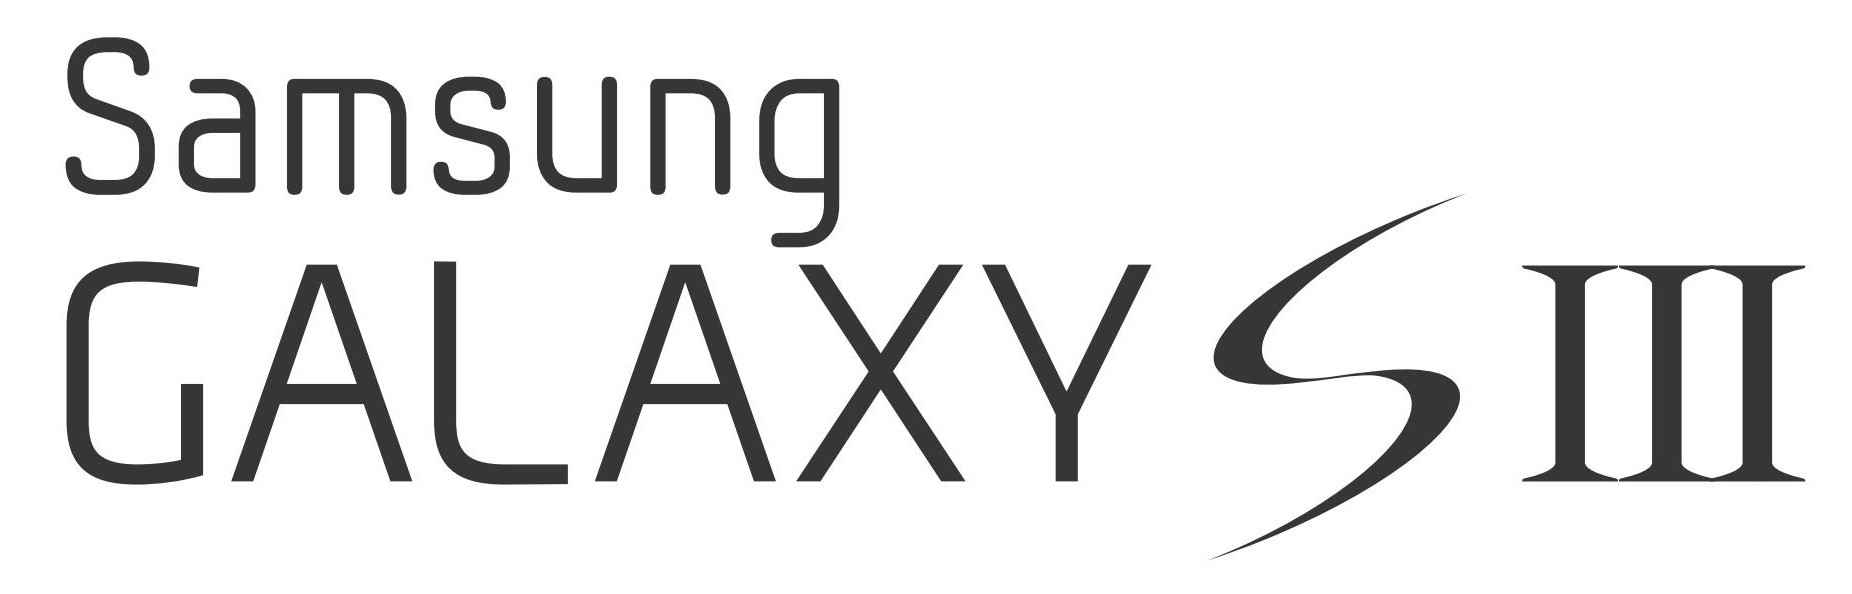 Samsung Galaxy S3 Logo [EPS File]